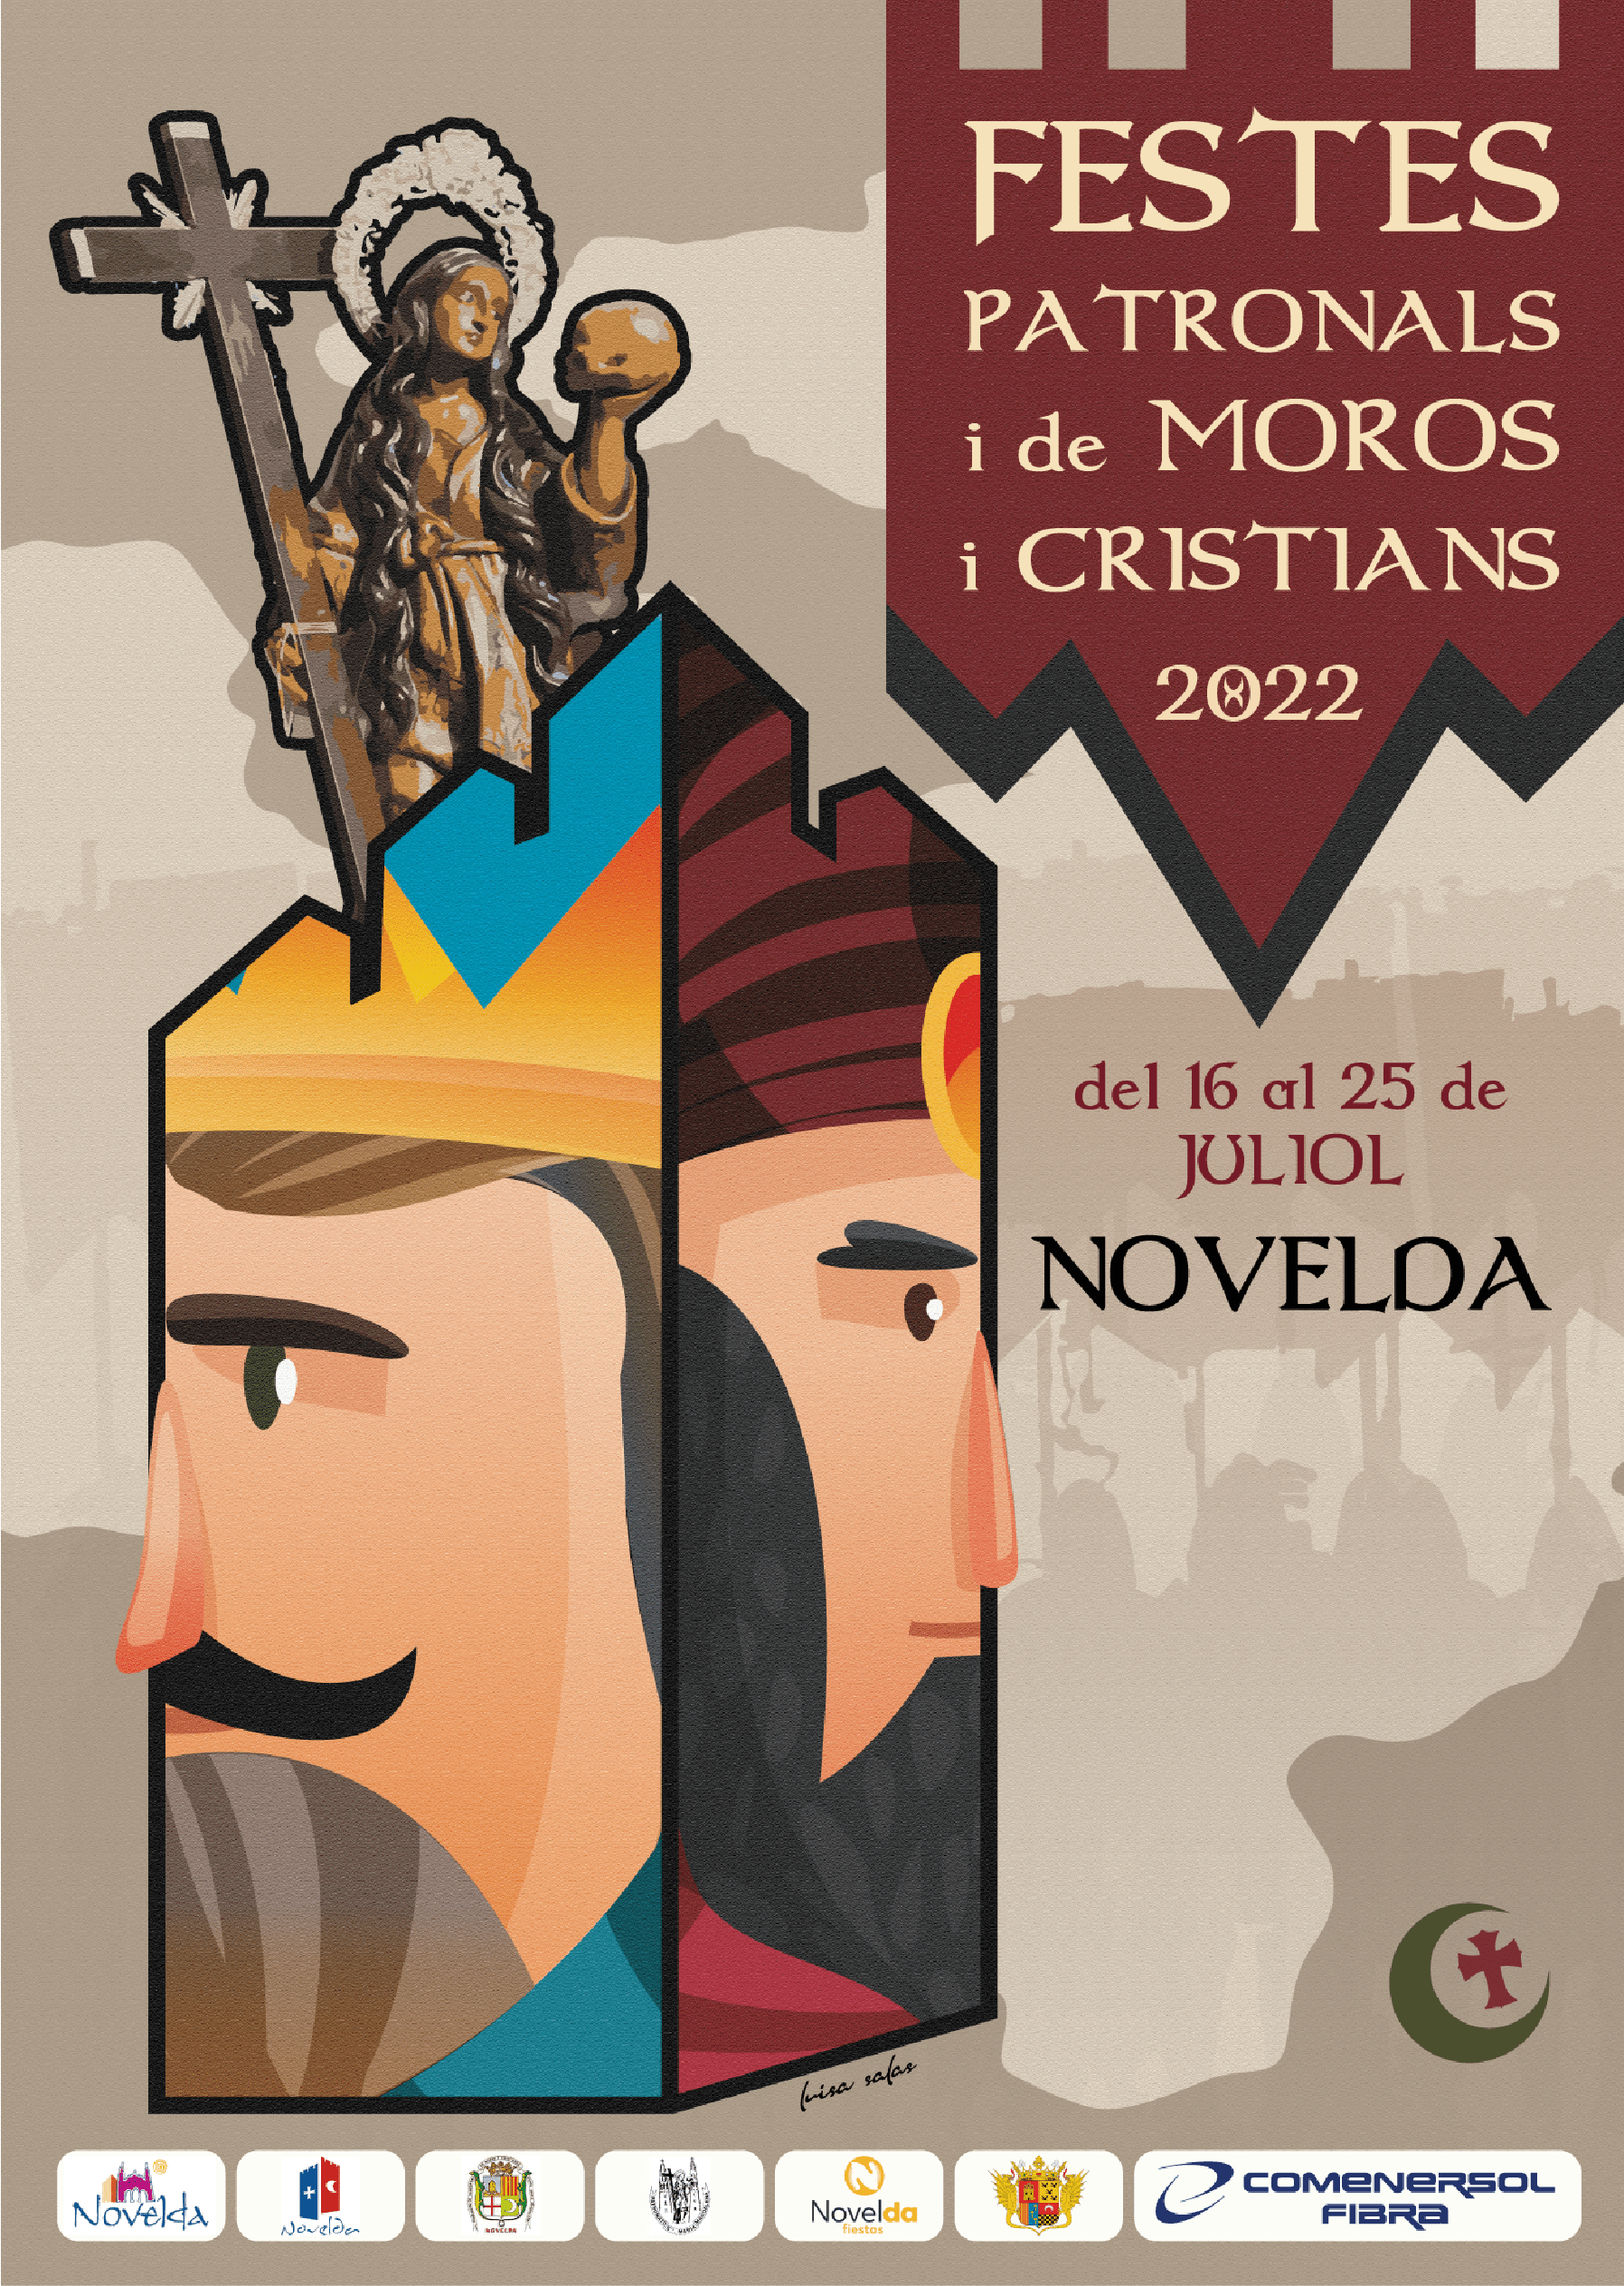 Ayuntamiento de Novelda Fiestas-01 FESTES PATRONALS I DE MOROS I CRISTIANS 2022 